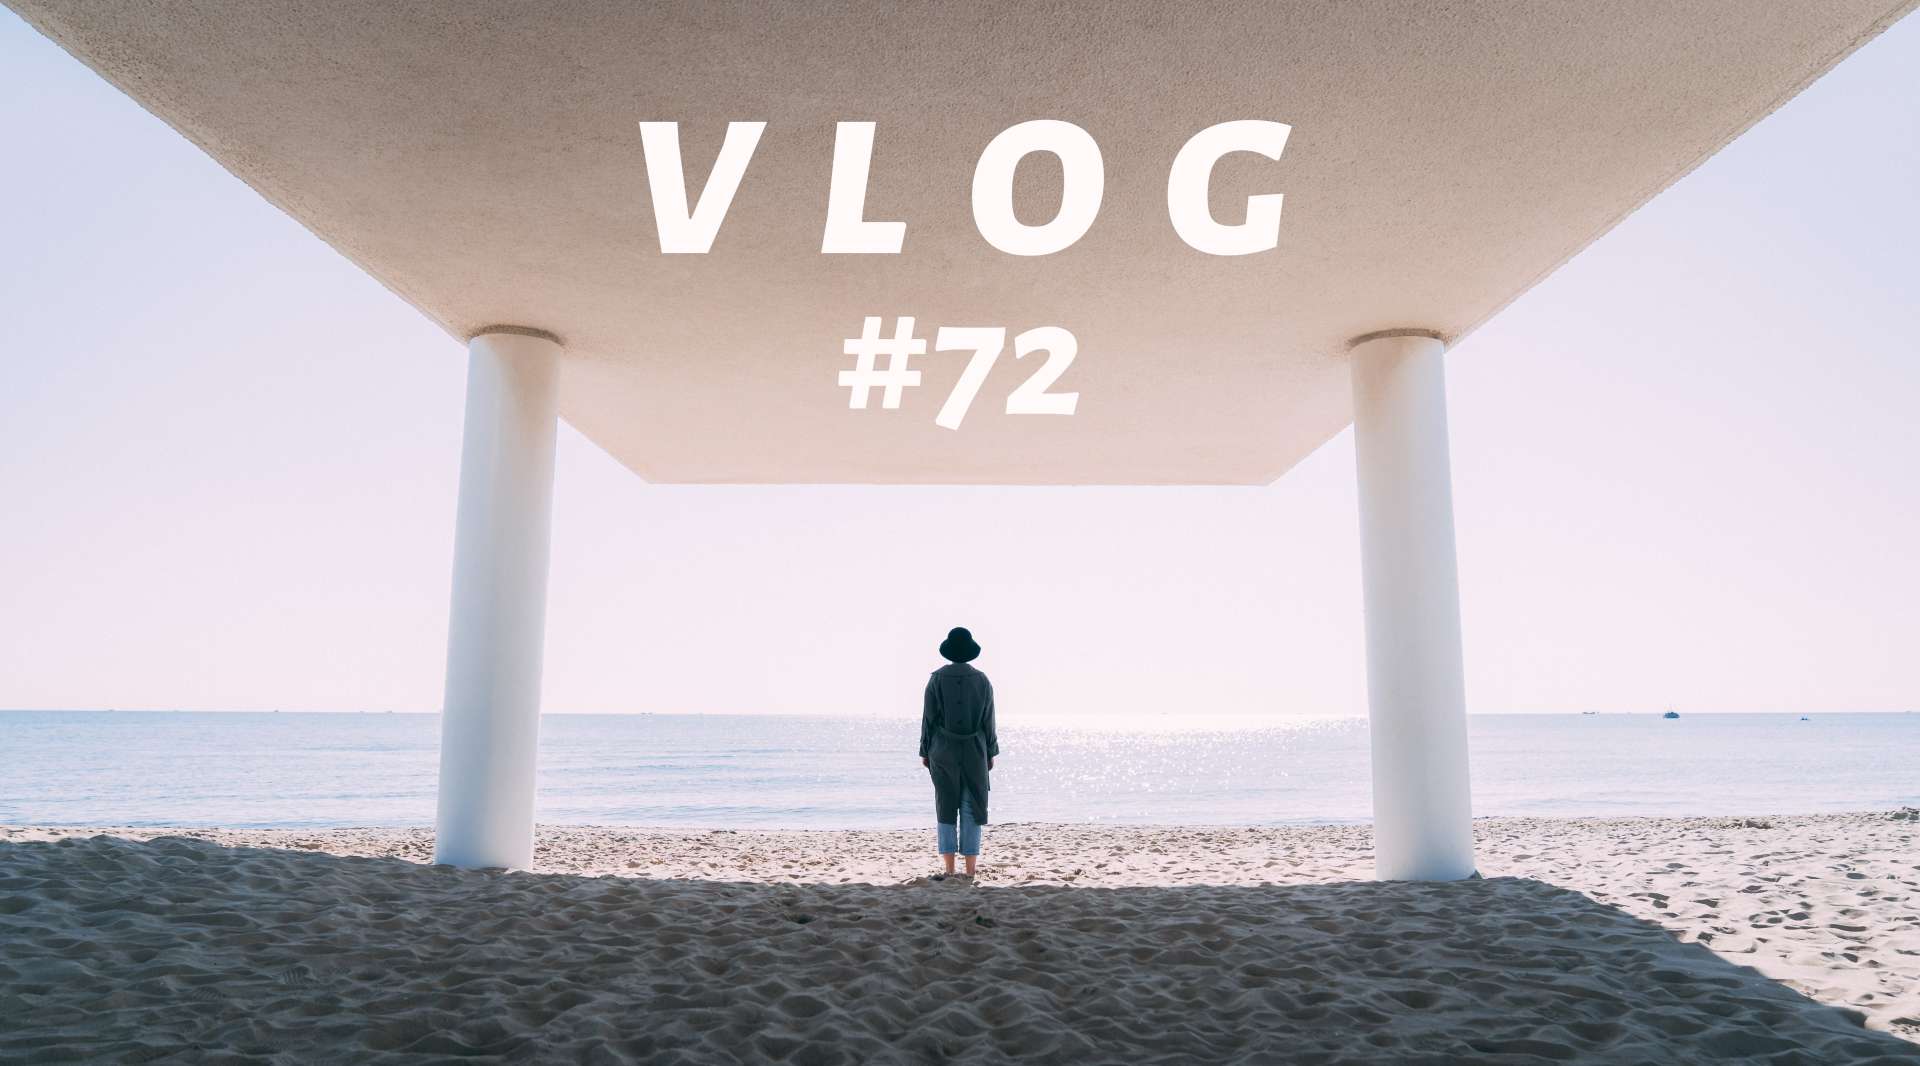 Vlog72 这个周末去海边了